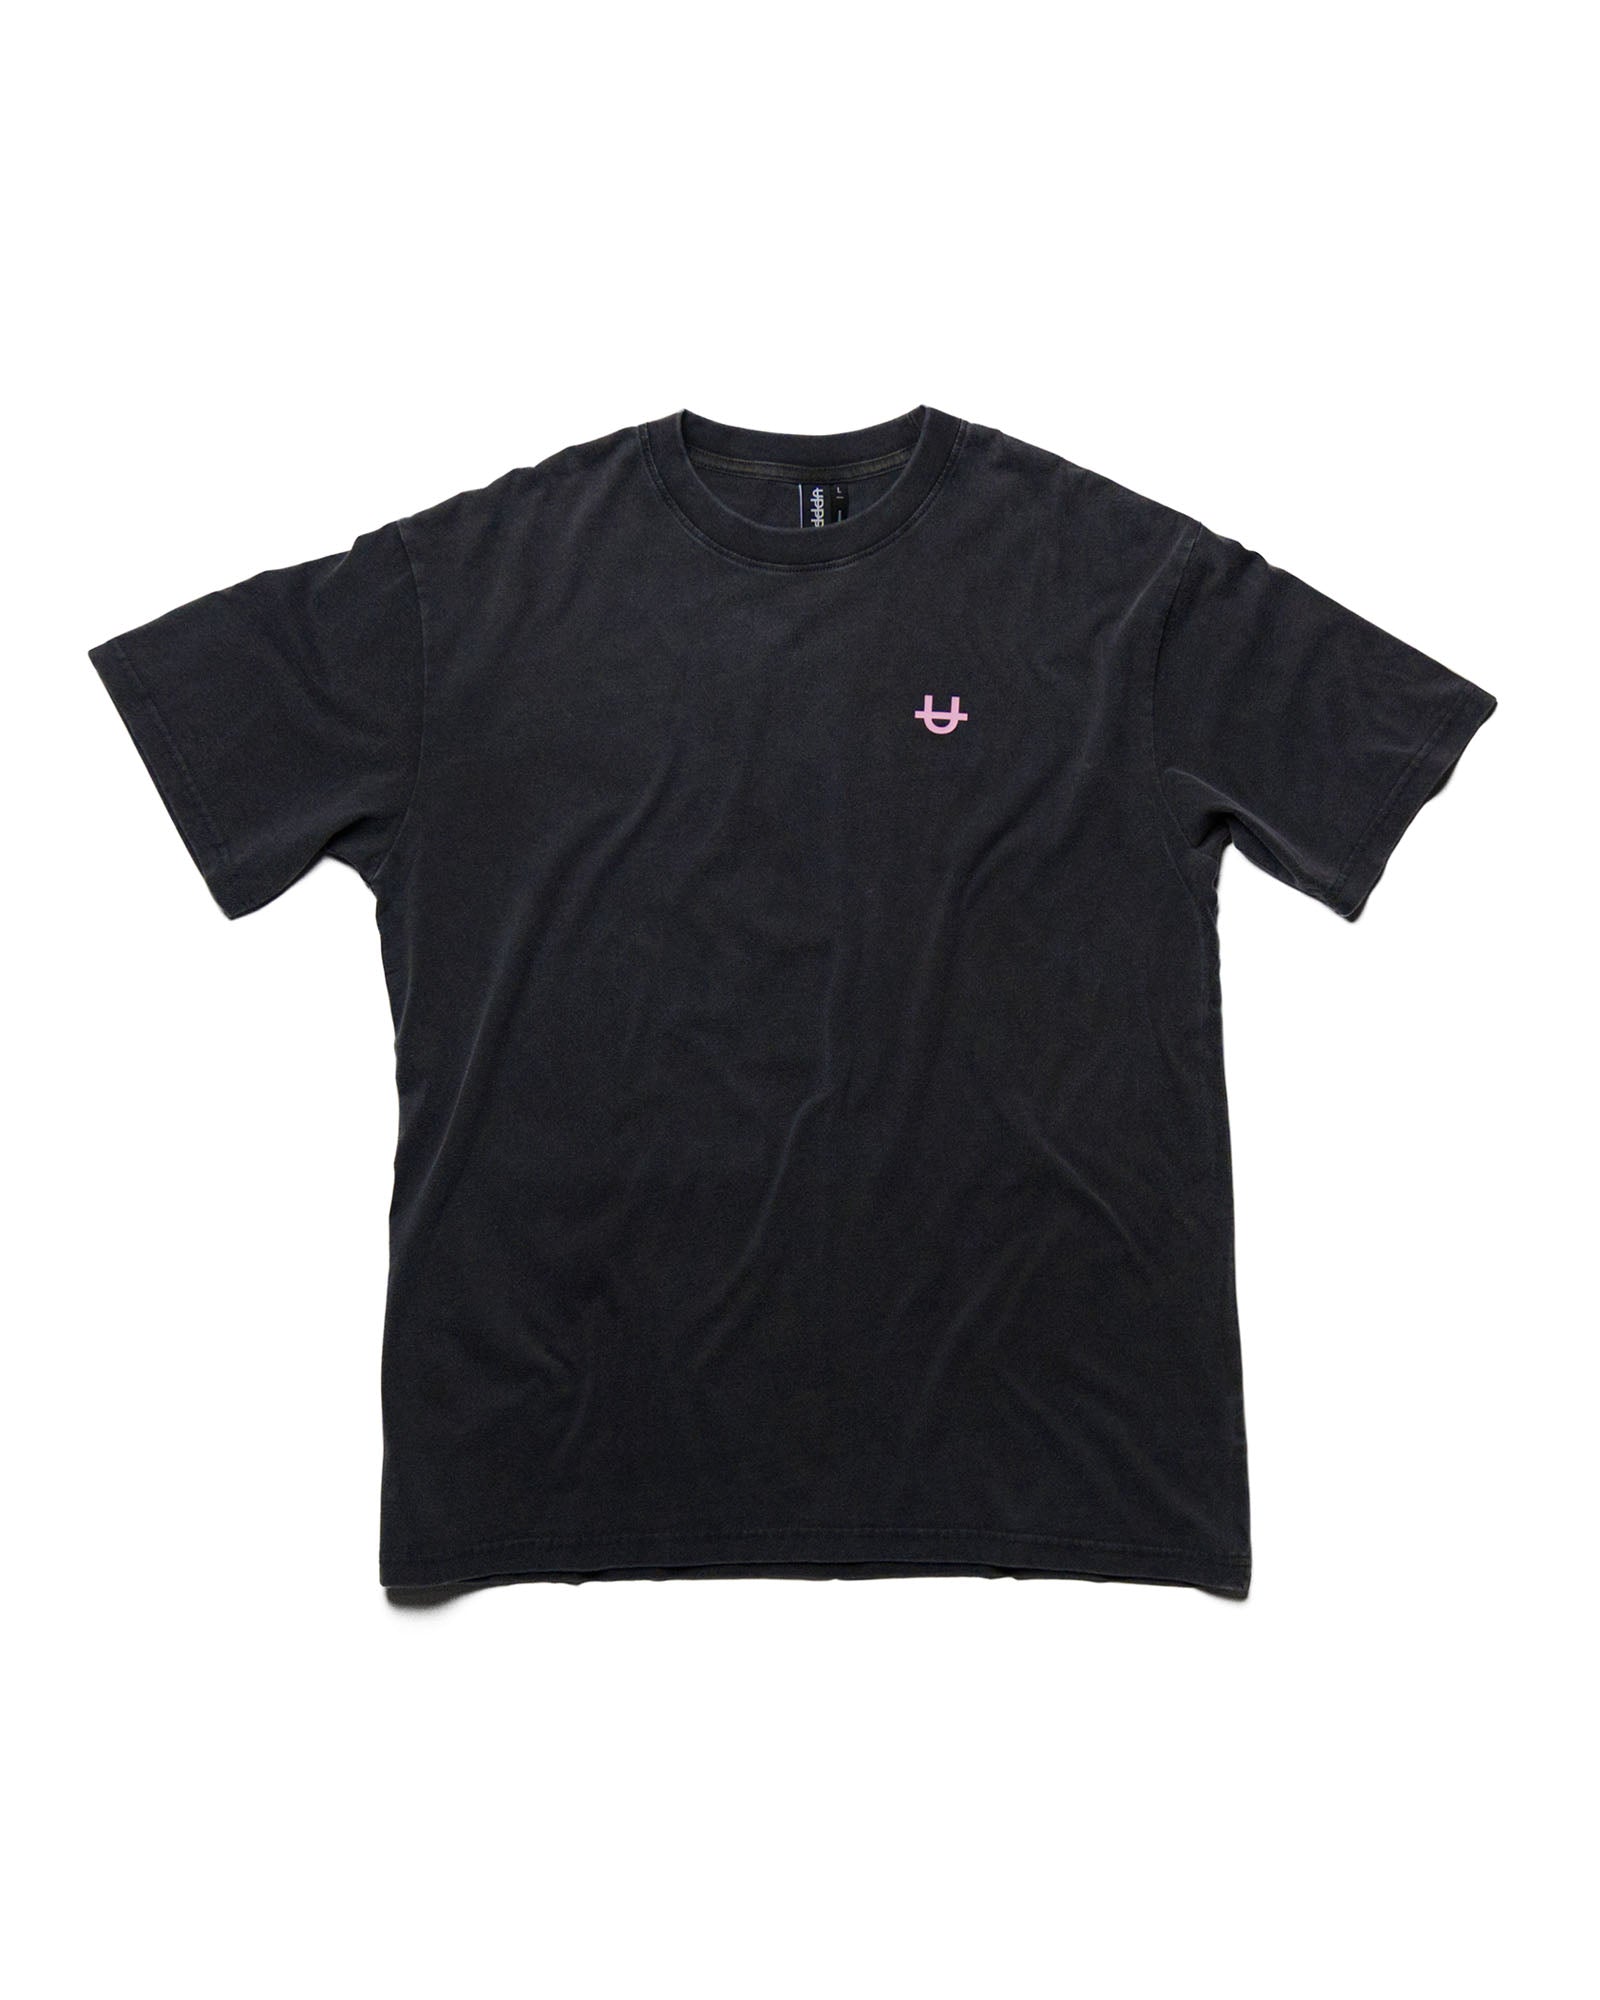 uppper core t-shirt washed black w/ pink logo